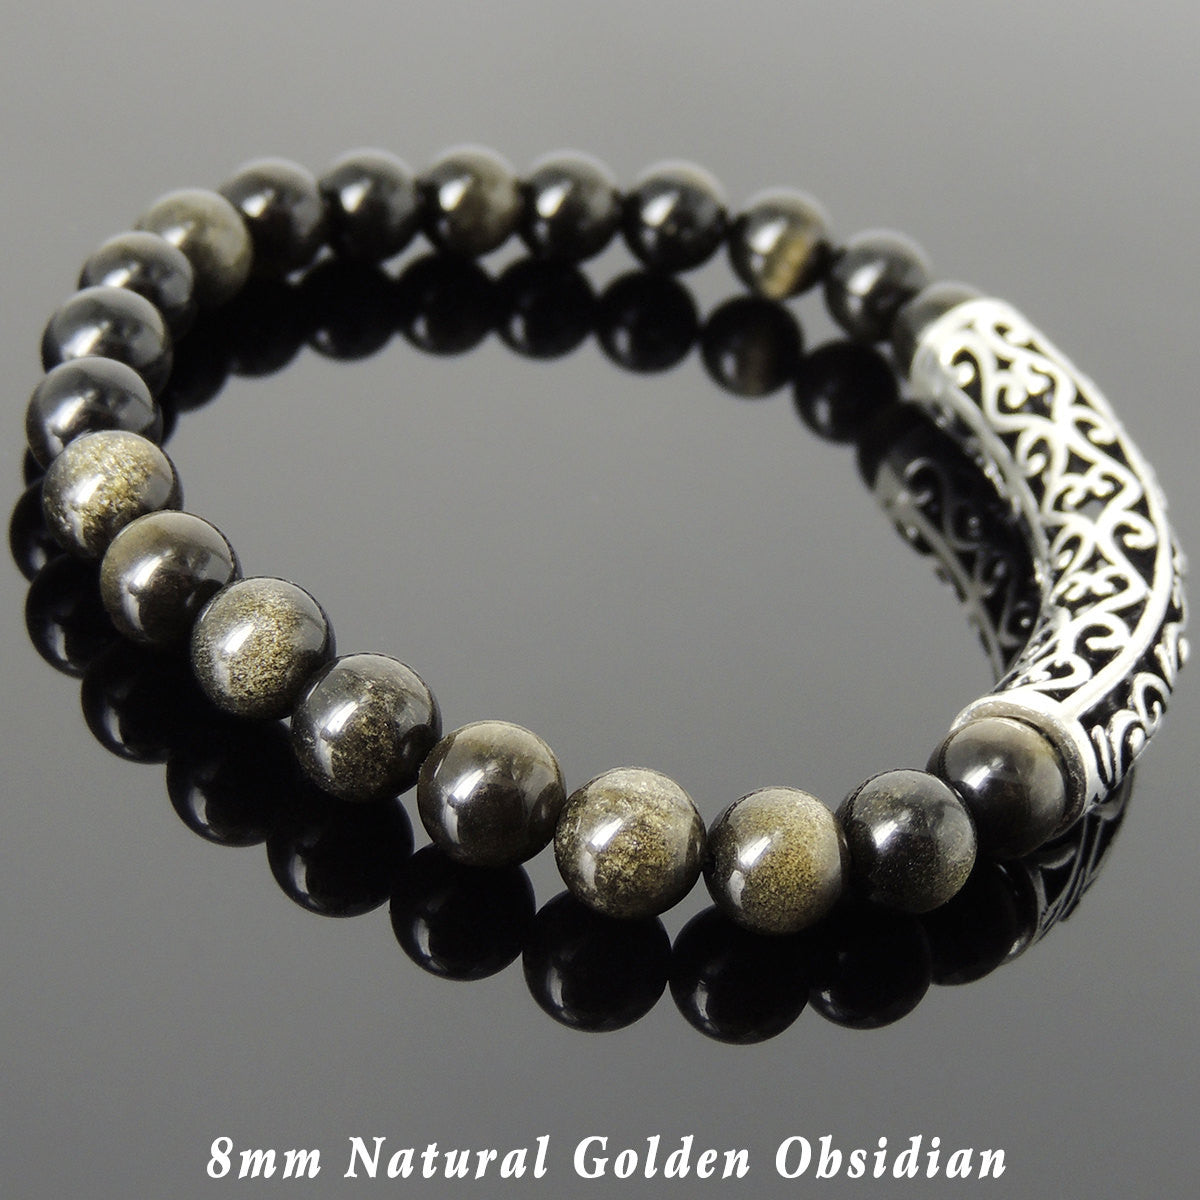 8mm Golden Obsidian Healing Gemstone Bracelet with S925 Sterling Silver Lotus Charm - Handmade by Gem & Silver BR1034